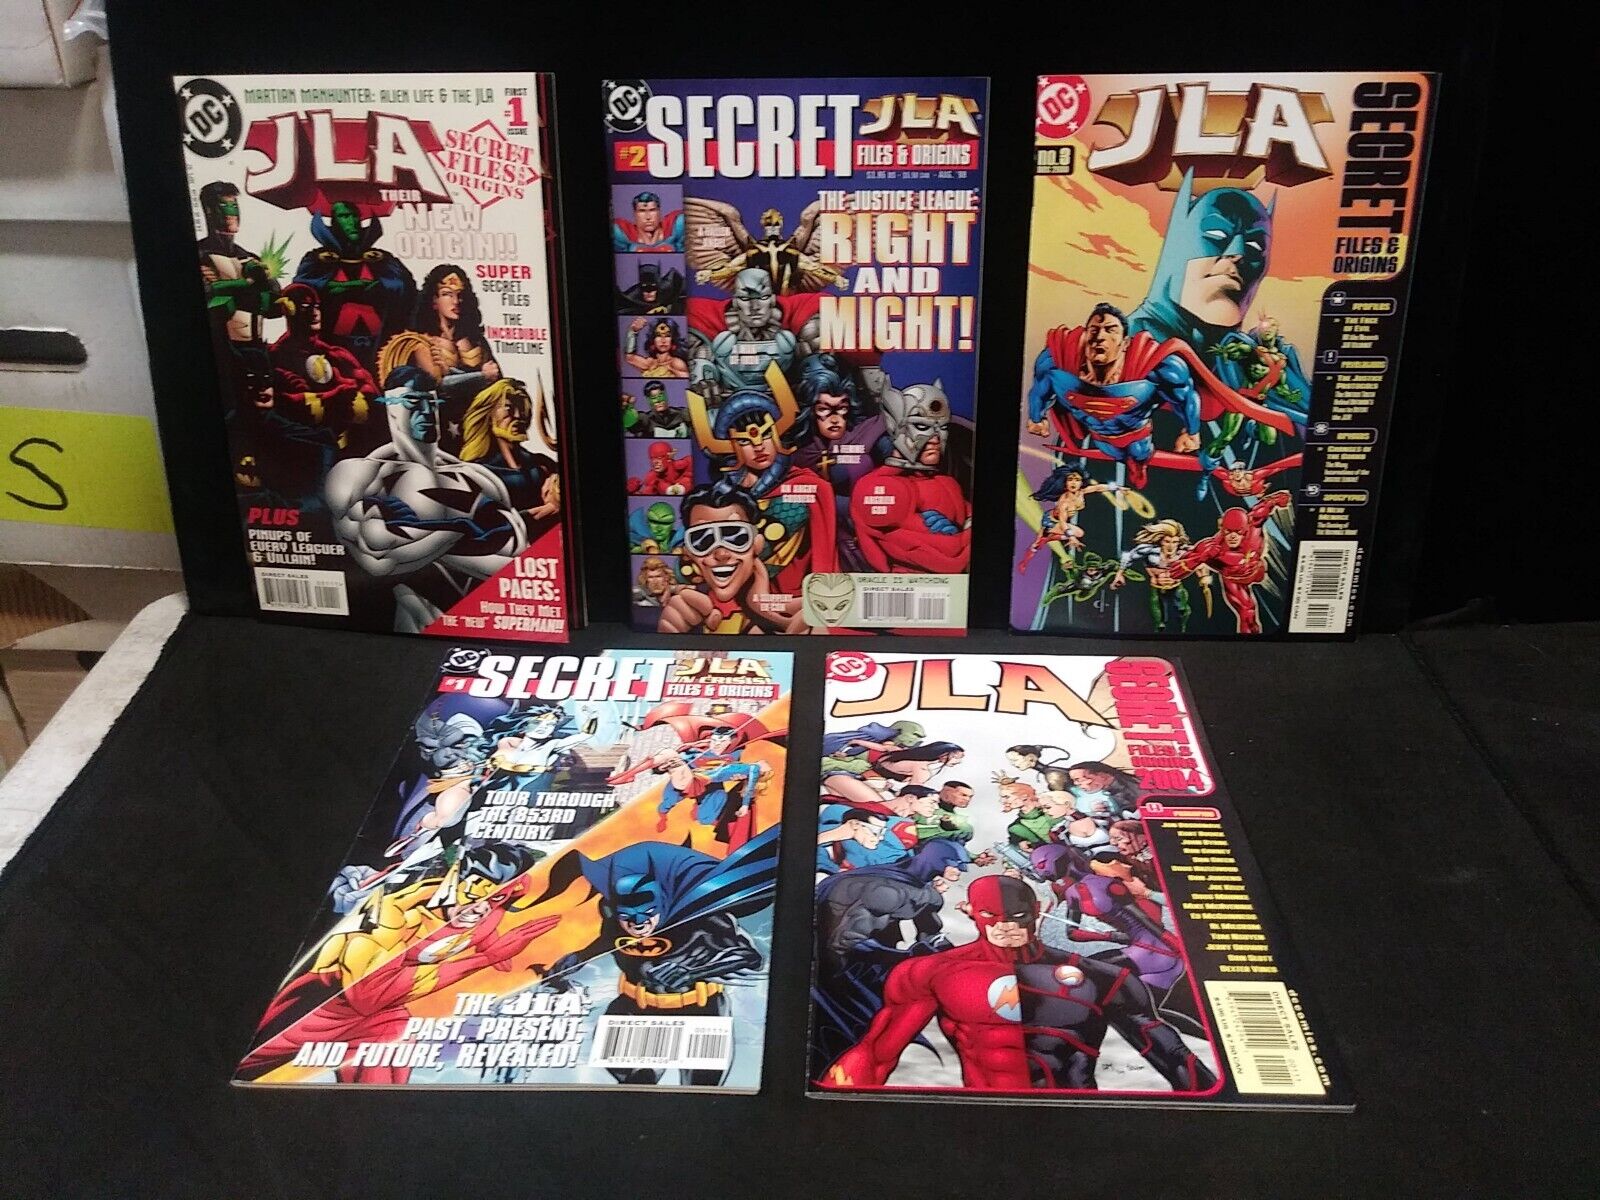 JLA #1-3 Secret Files & Origins 1 2 3 + 2004 + In Crisis (X5) DC 1997-2004 